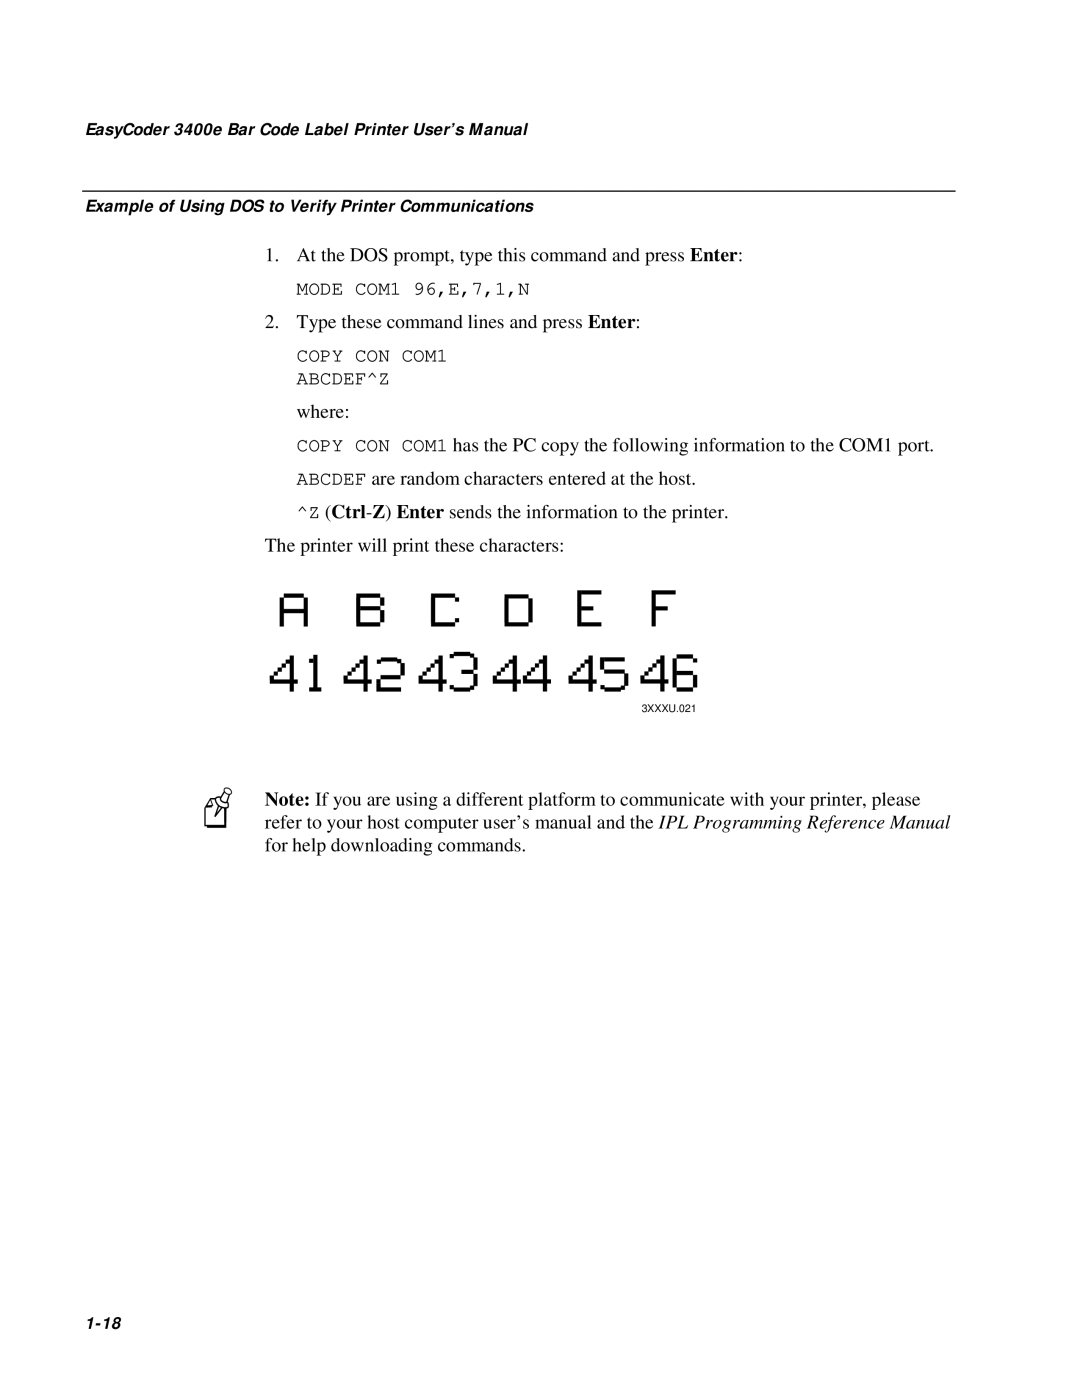 IBM EasyCoder 3400e Bar Code Label Printer User’s Manual, Example of Using DOS to Verify Printer Communications, 1-18 